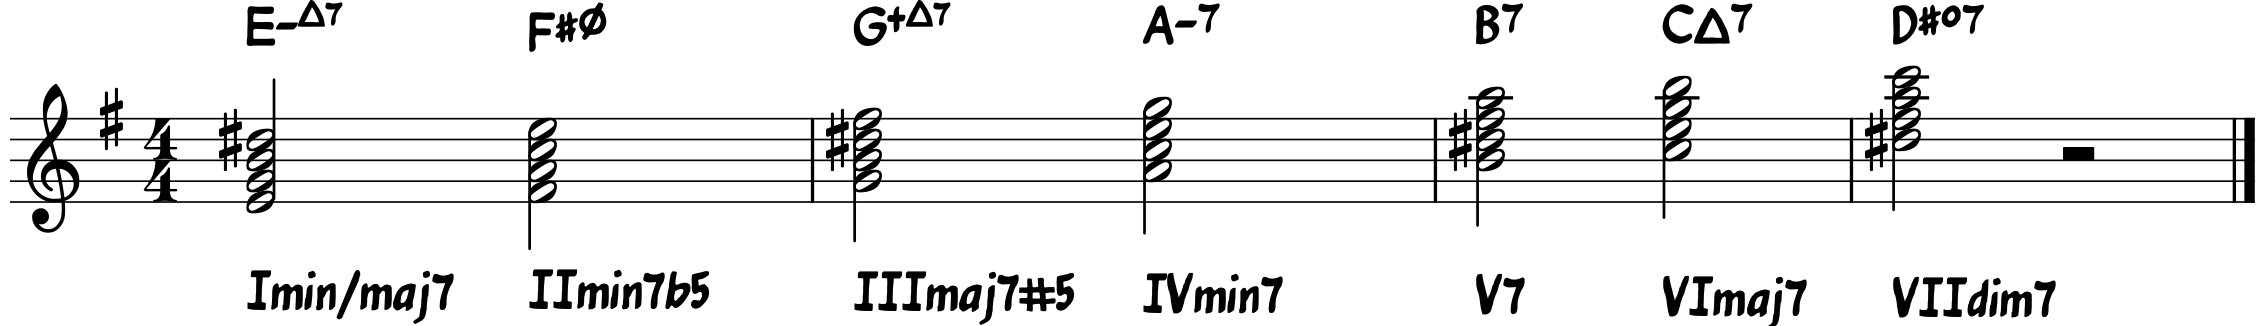 harmonic minor scale formula